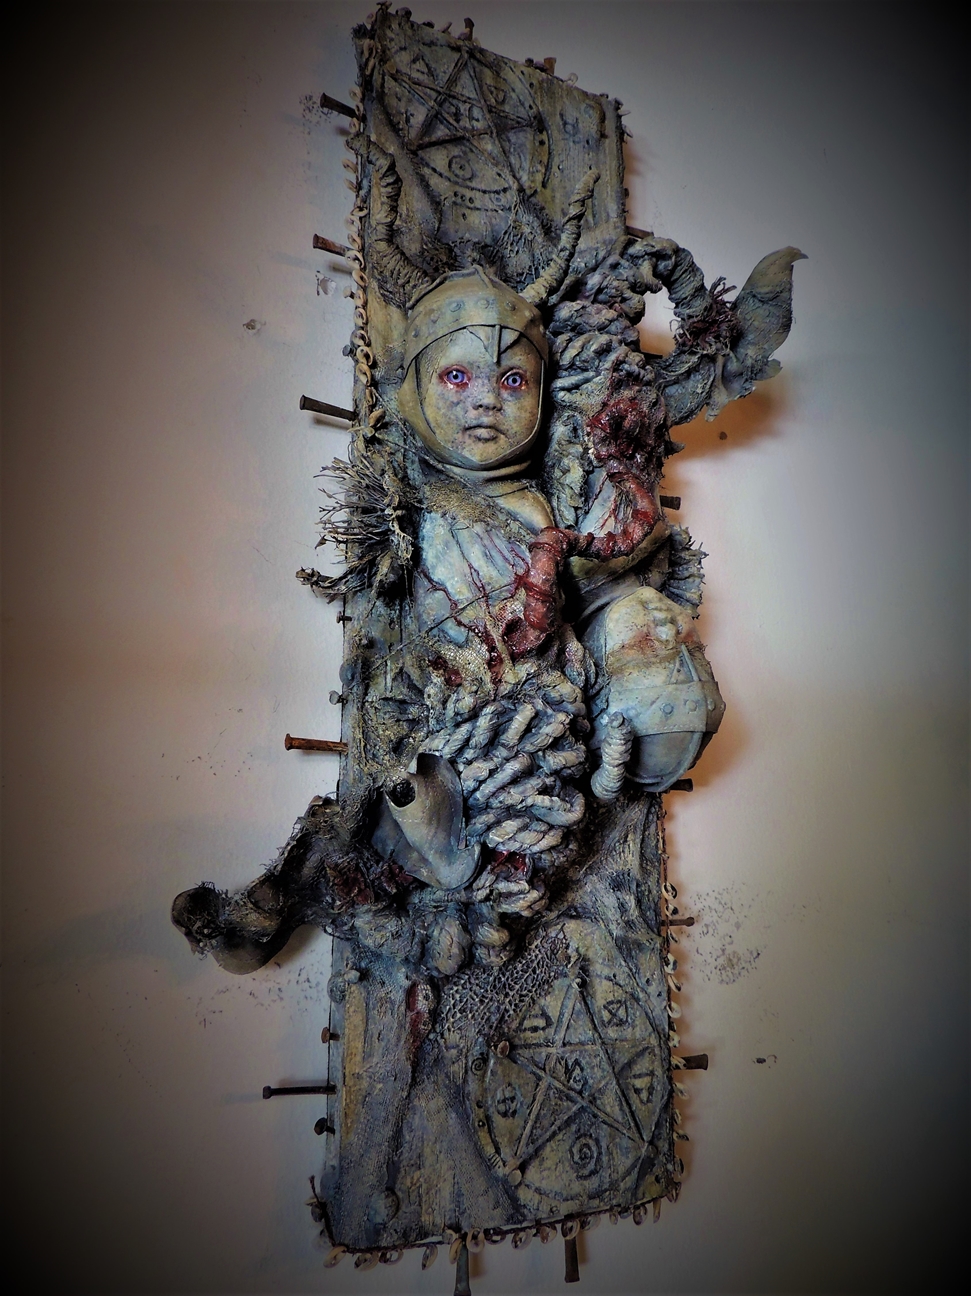 mixed media assemblage ghastly repainted baby dolls mounted on wooden board dark art pentagram